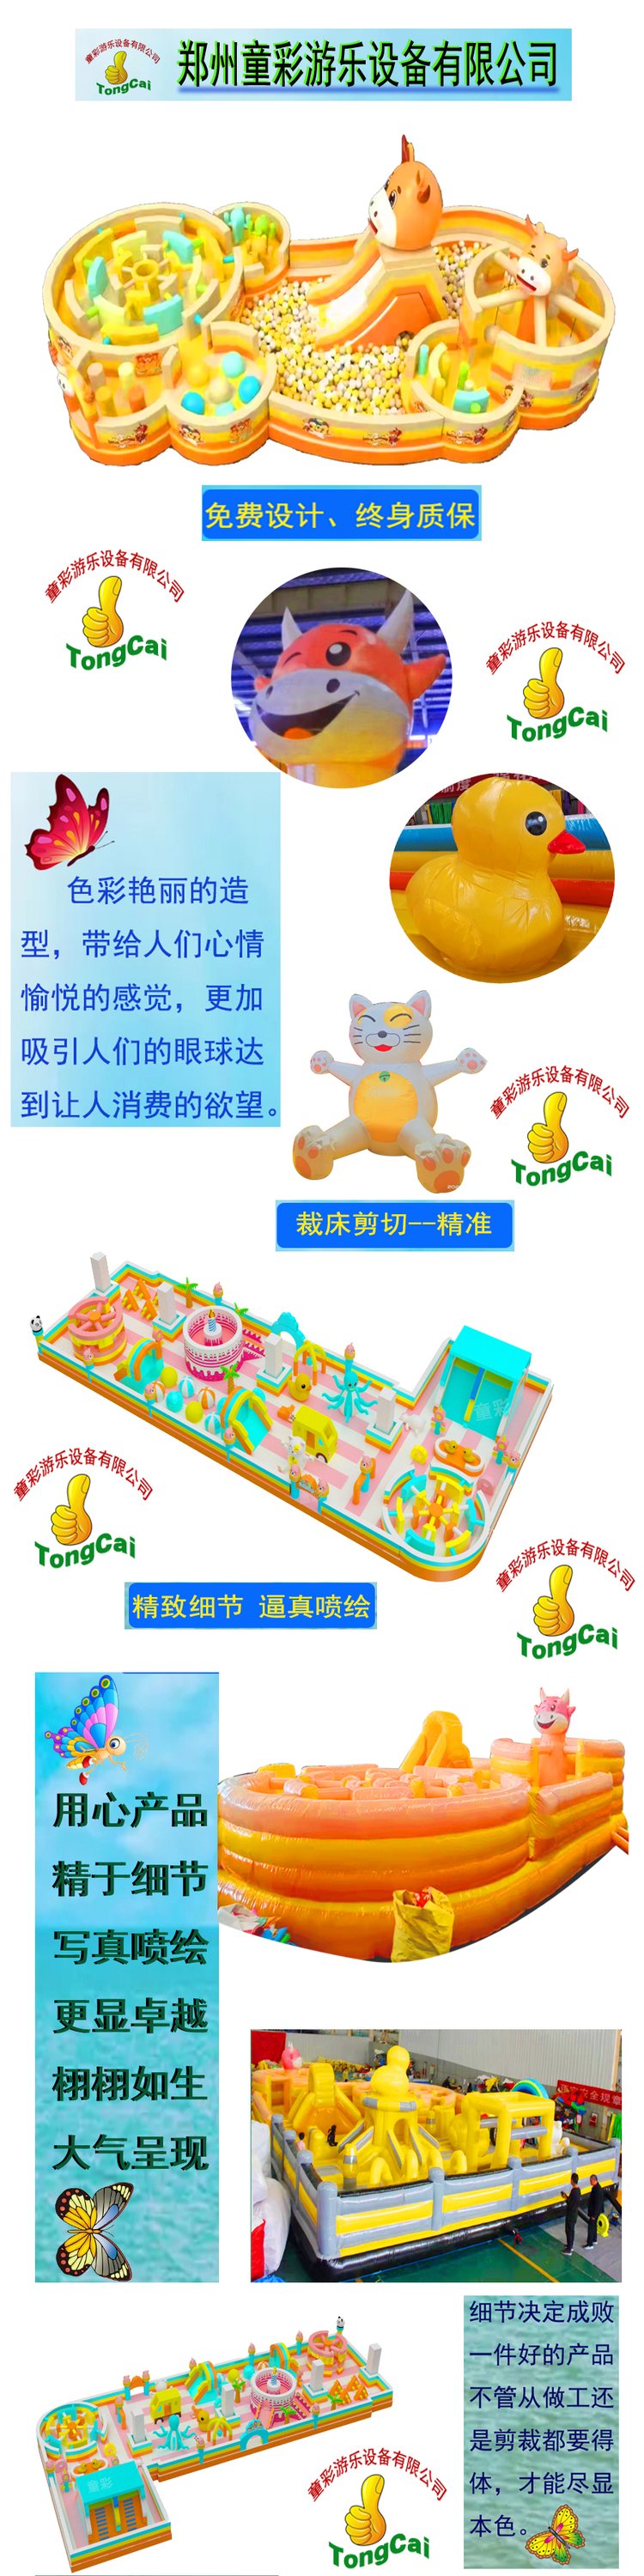 Children's Colorful Inflatable Large Toy Entertainment Equipment Large Castle Challenge Children's Mobile Slide